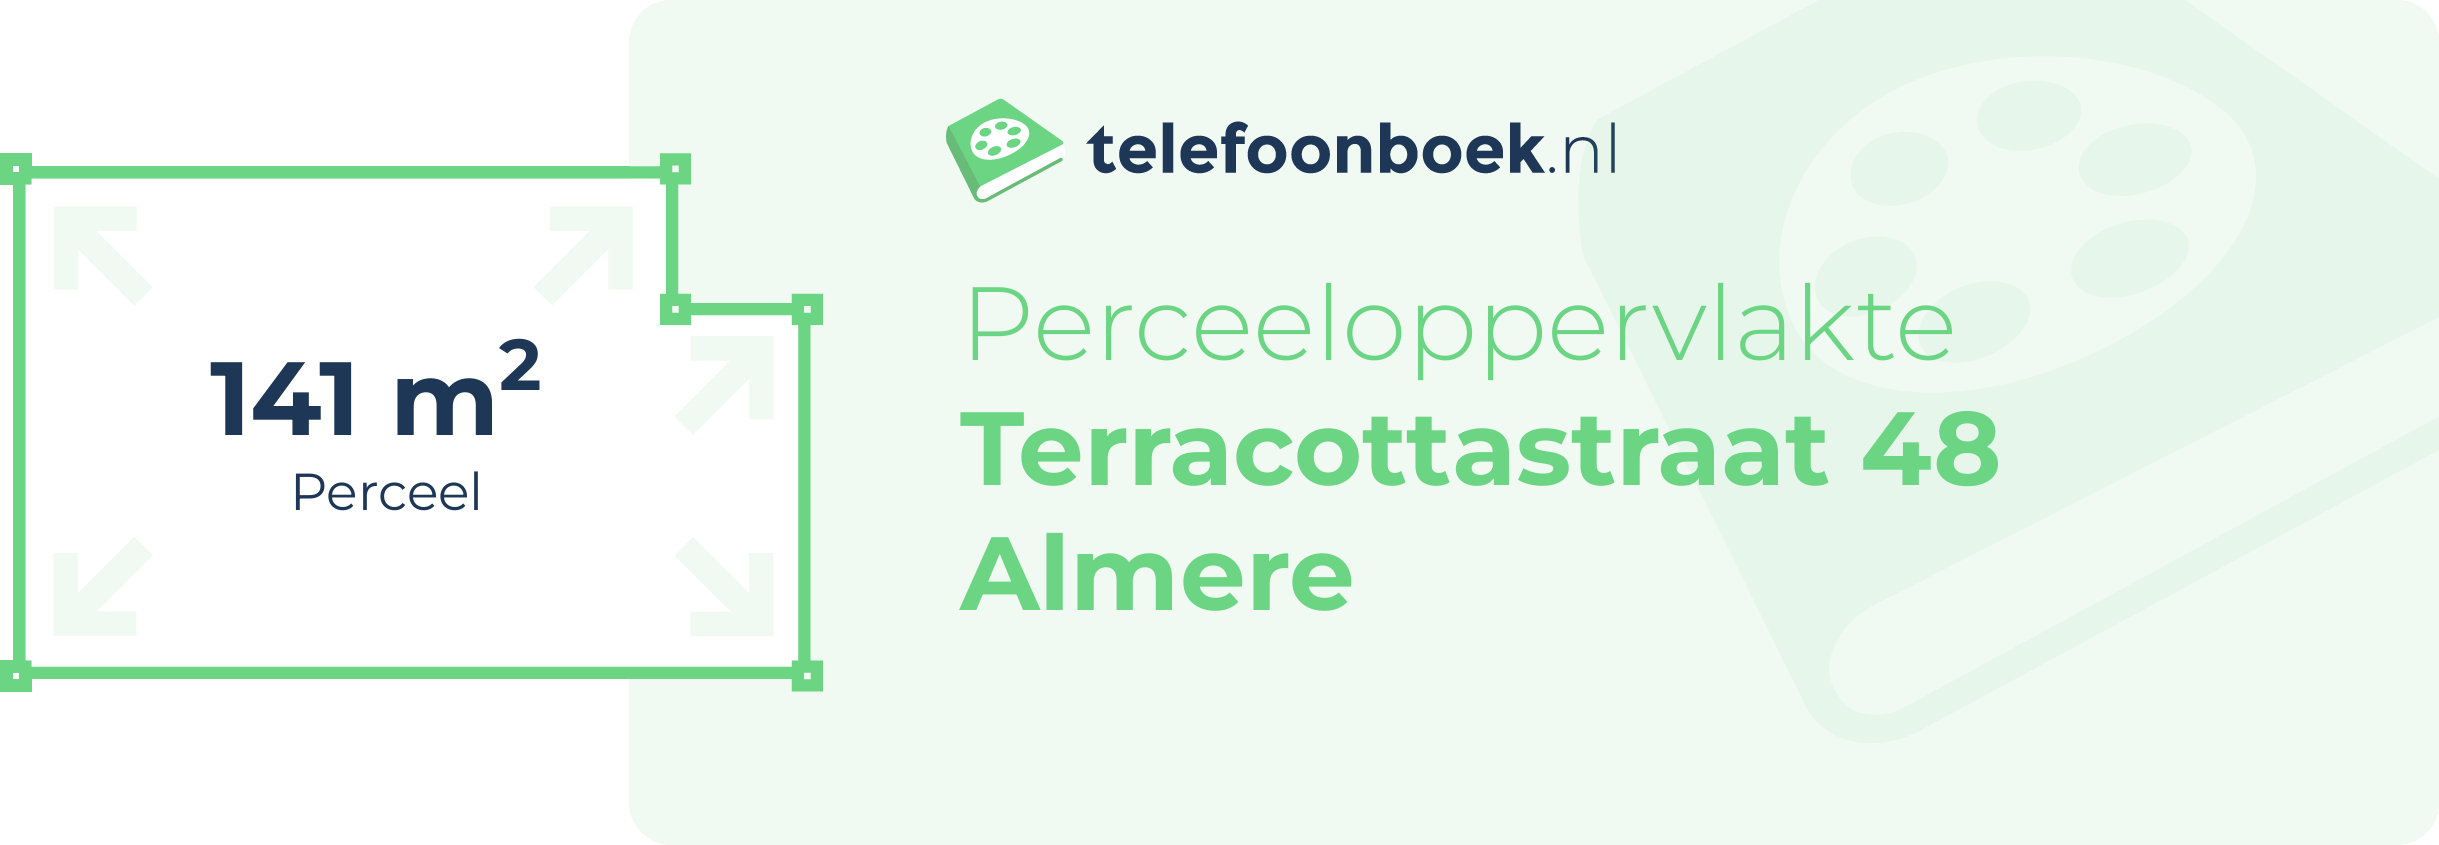 Perceeloppervlakte Terracottastraat 48 Almere